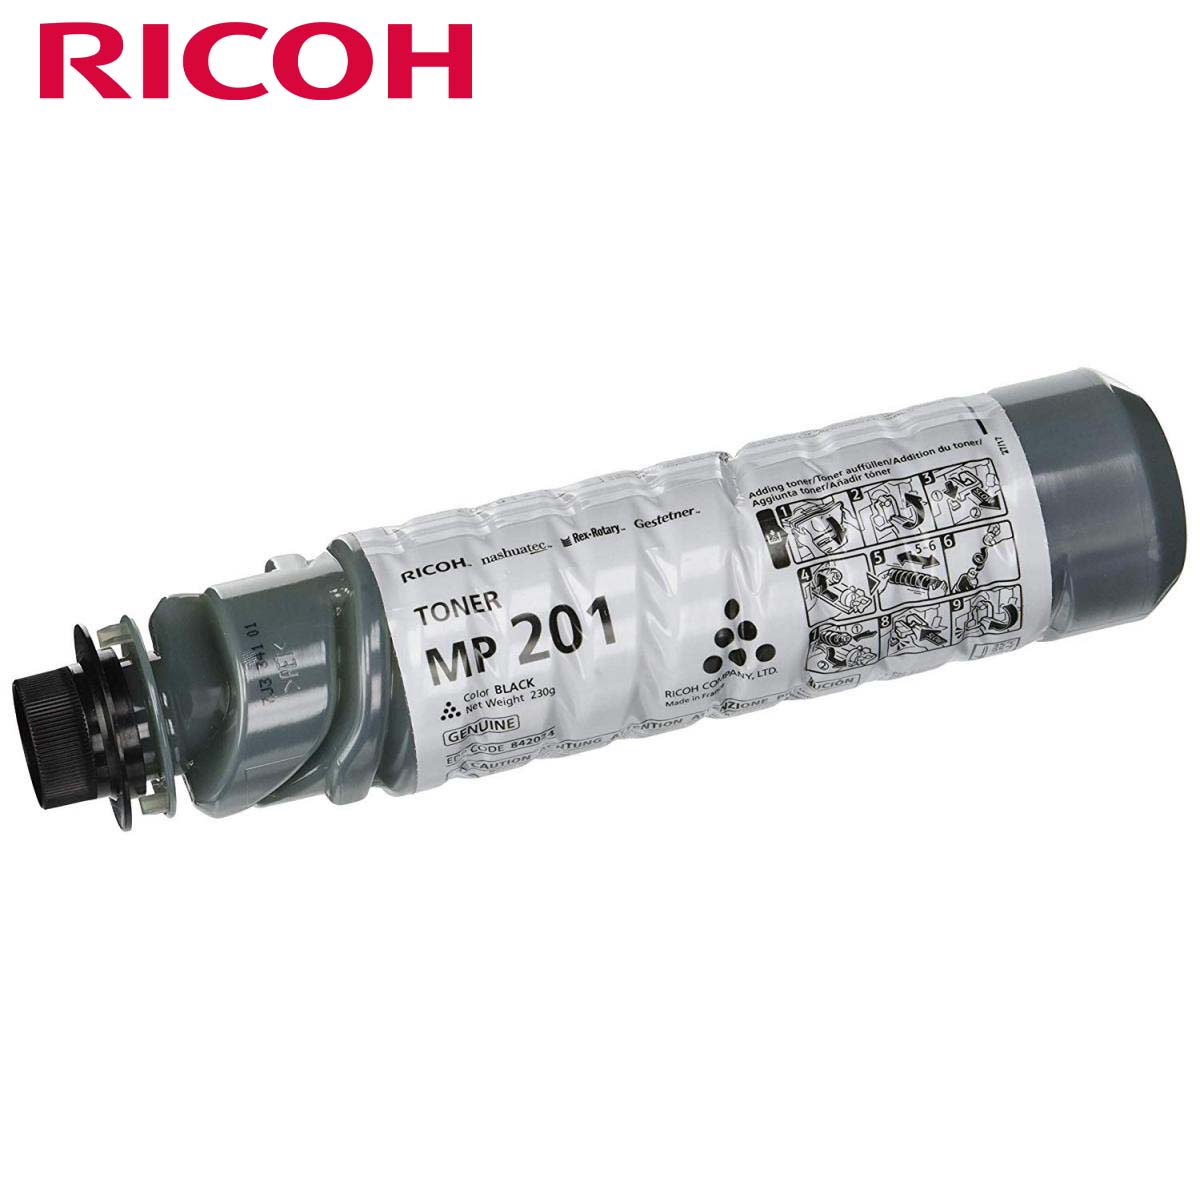 Ricoh 842024 / Type 1170 Laser Toner Cartridge (Original)